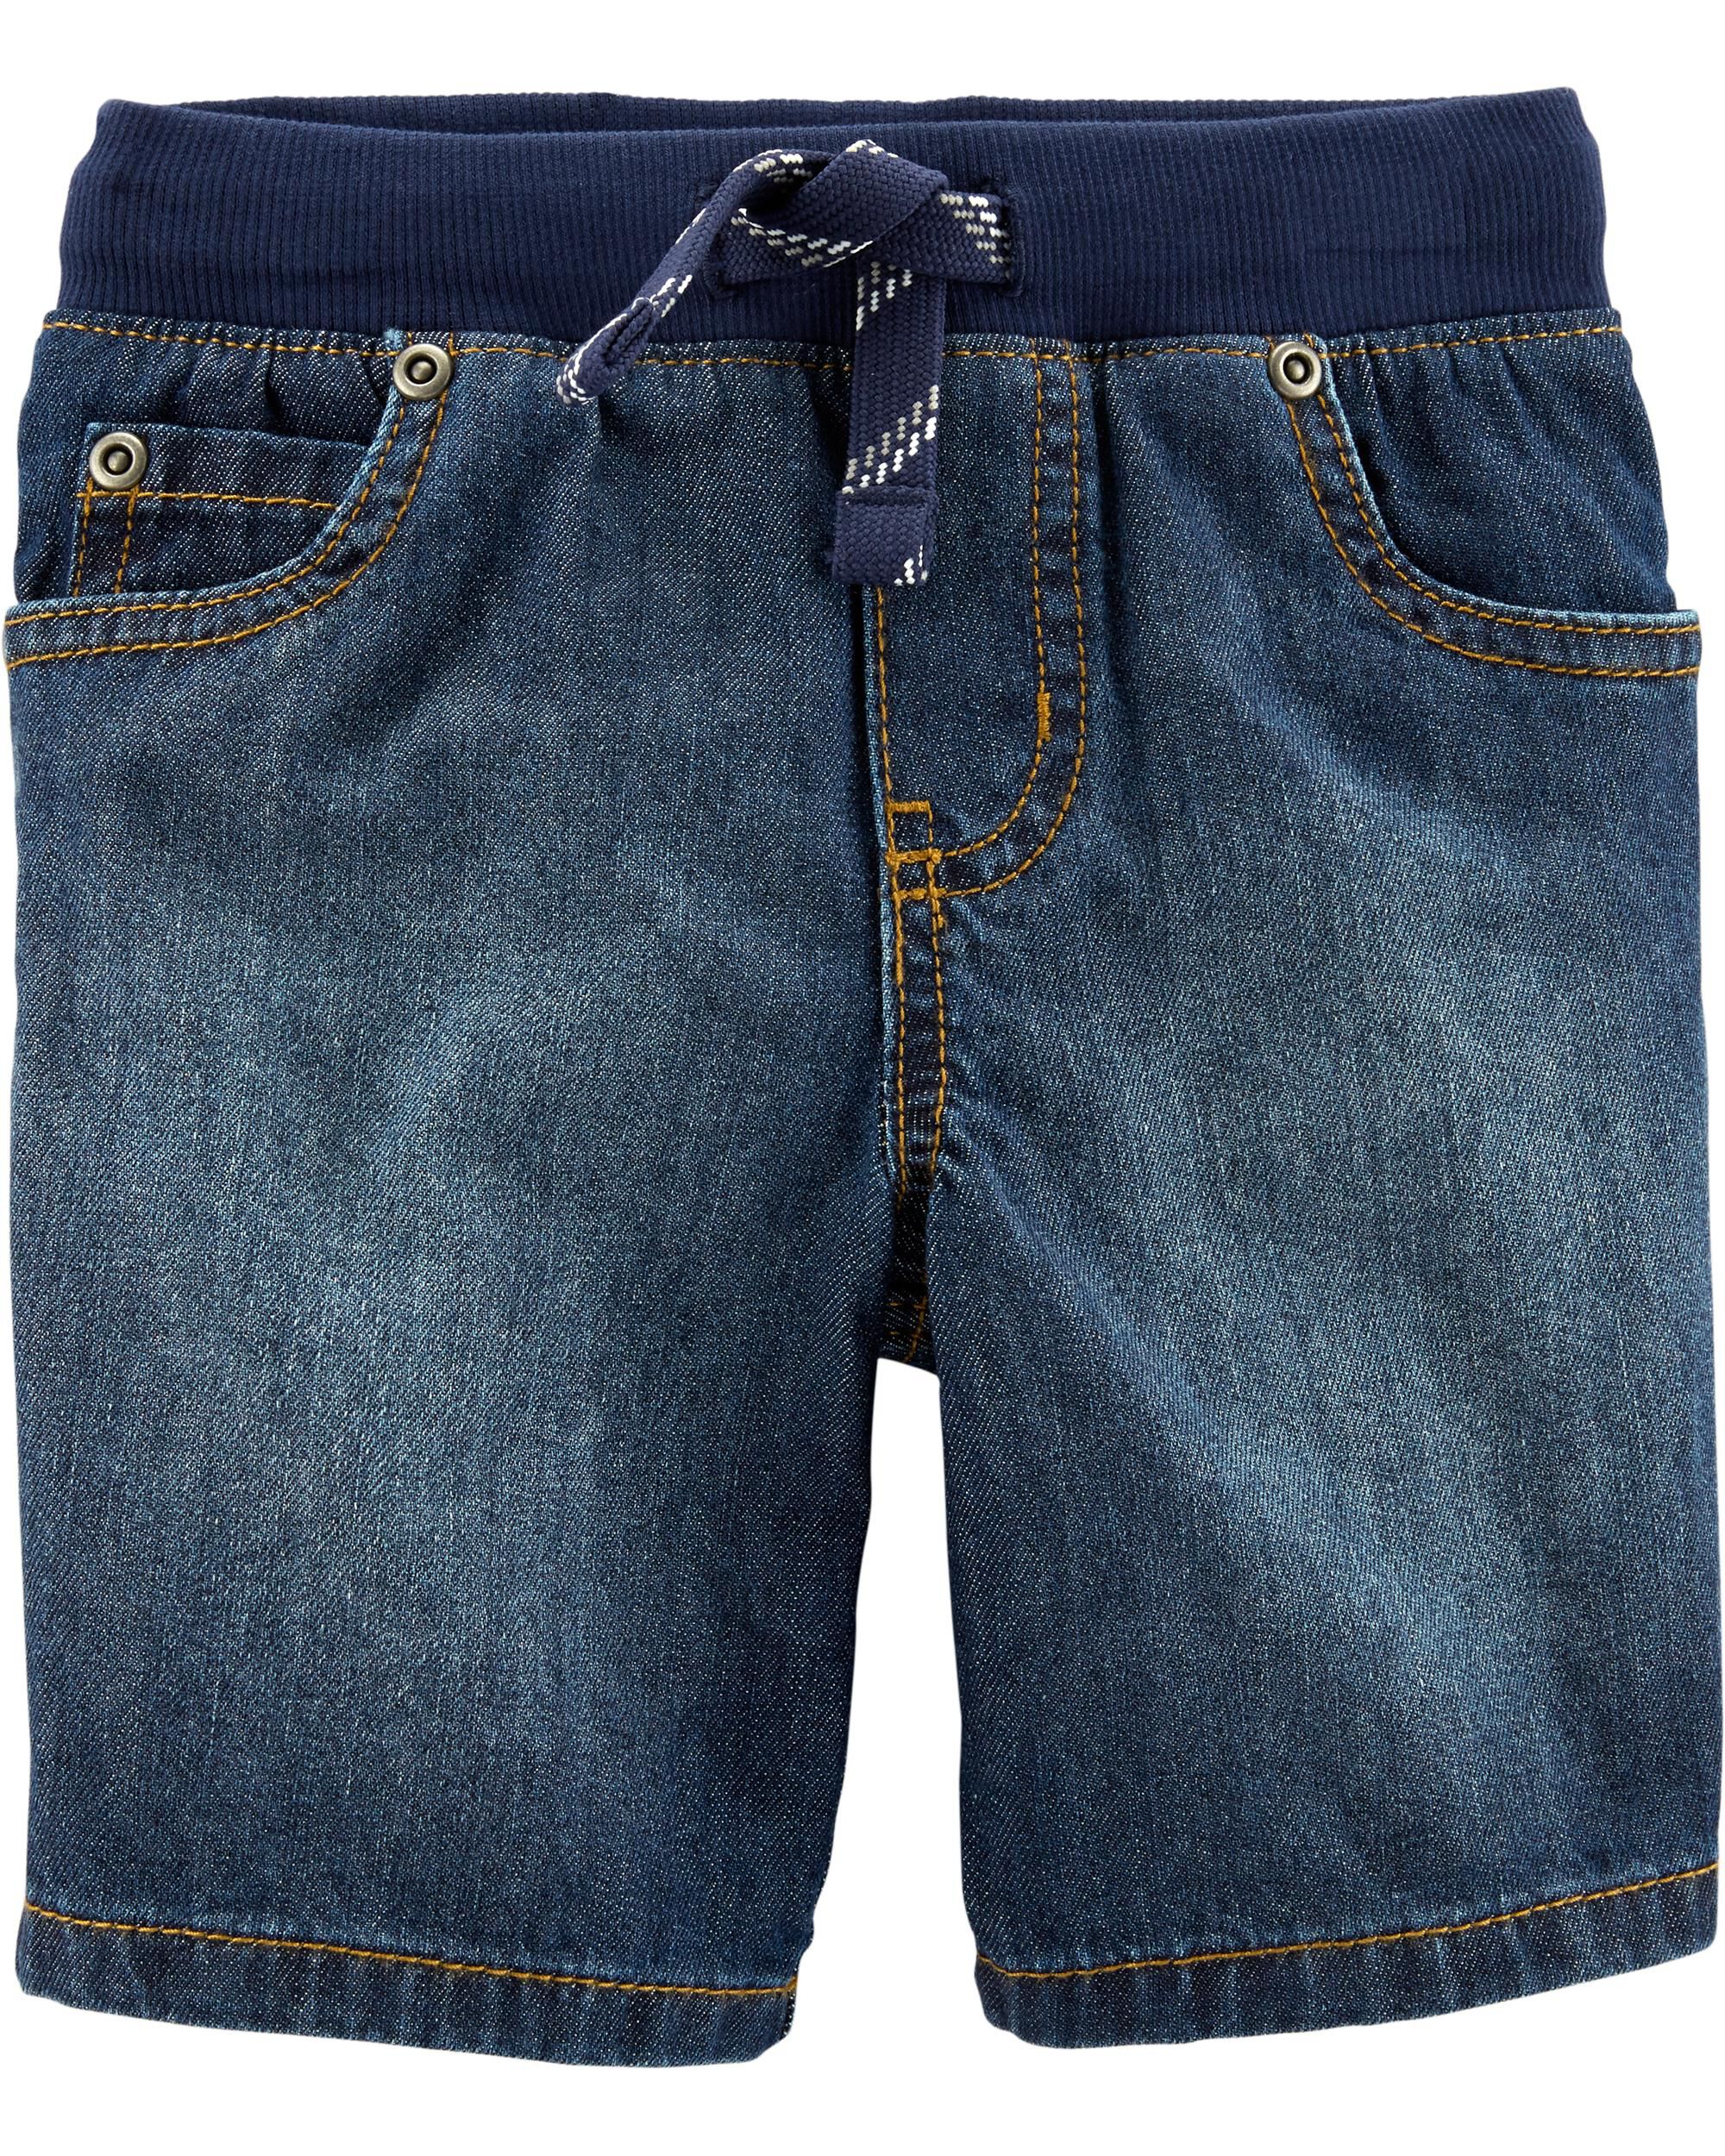 Easy Pull-On Denim Shorts | carters.com